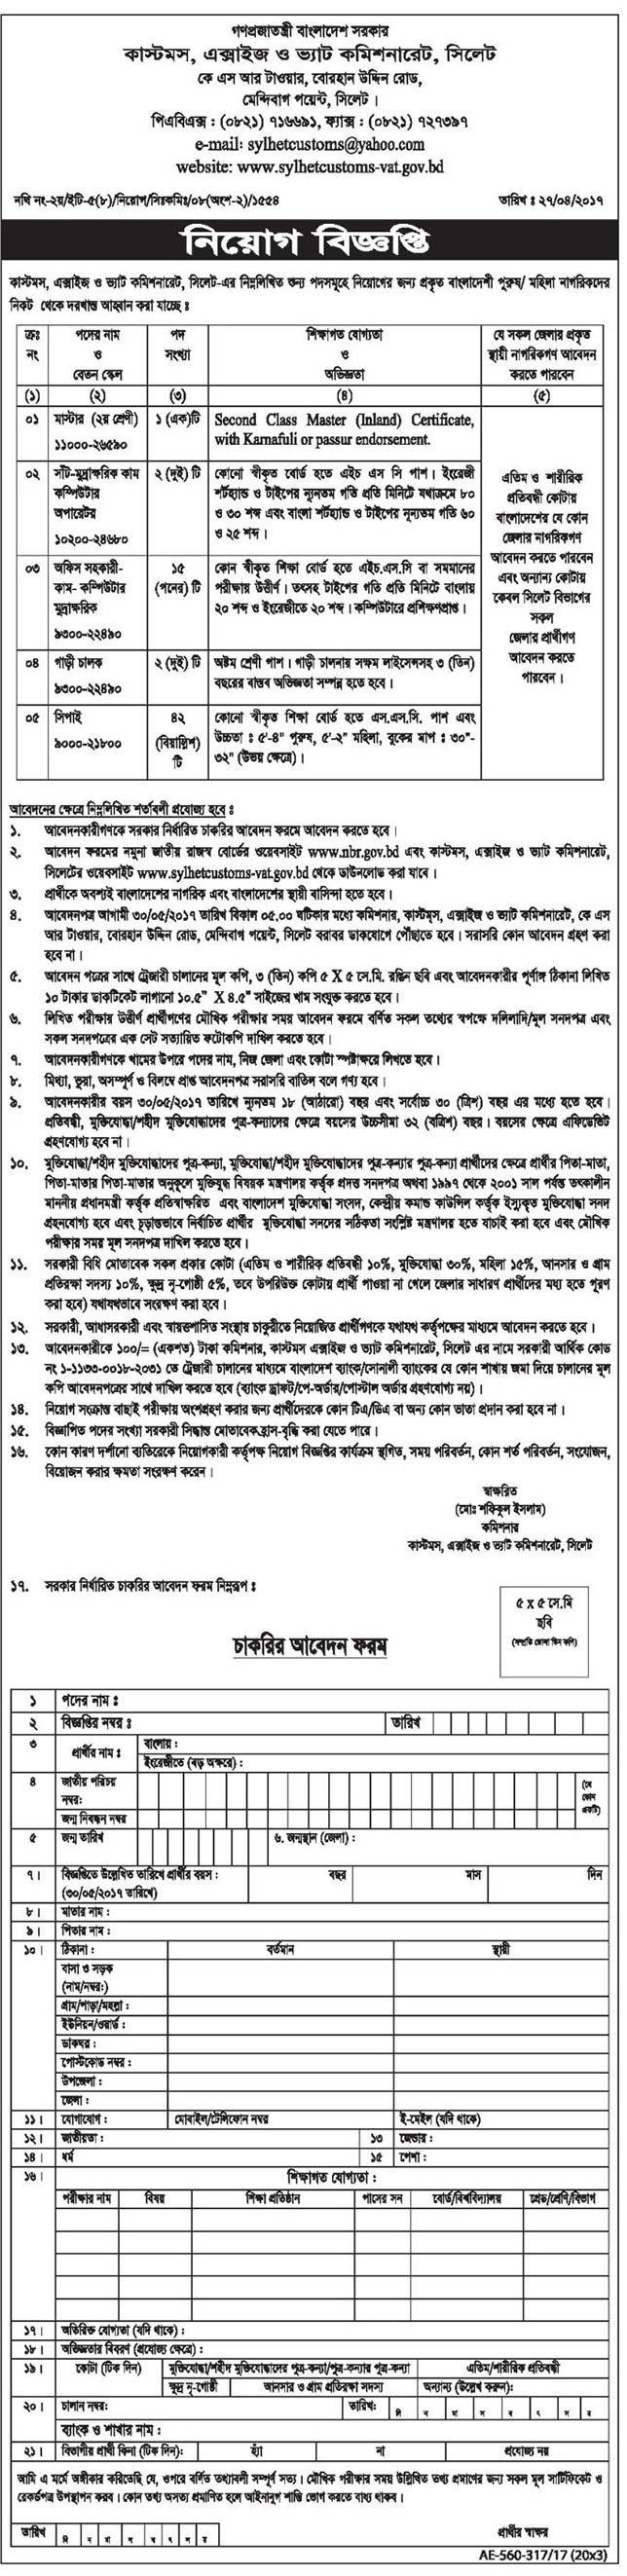 Bangladesh Customs, Excise and VAT Commissionerate Job Circular 2017